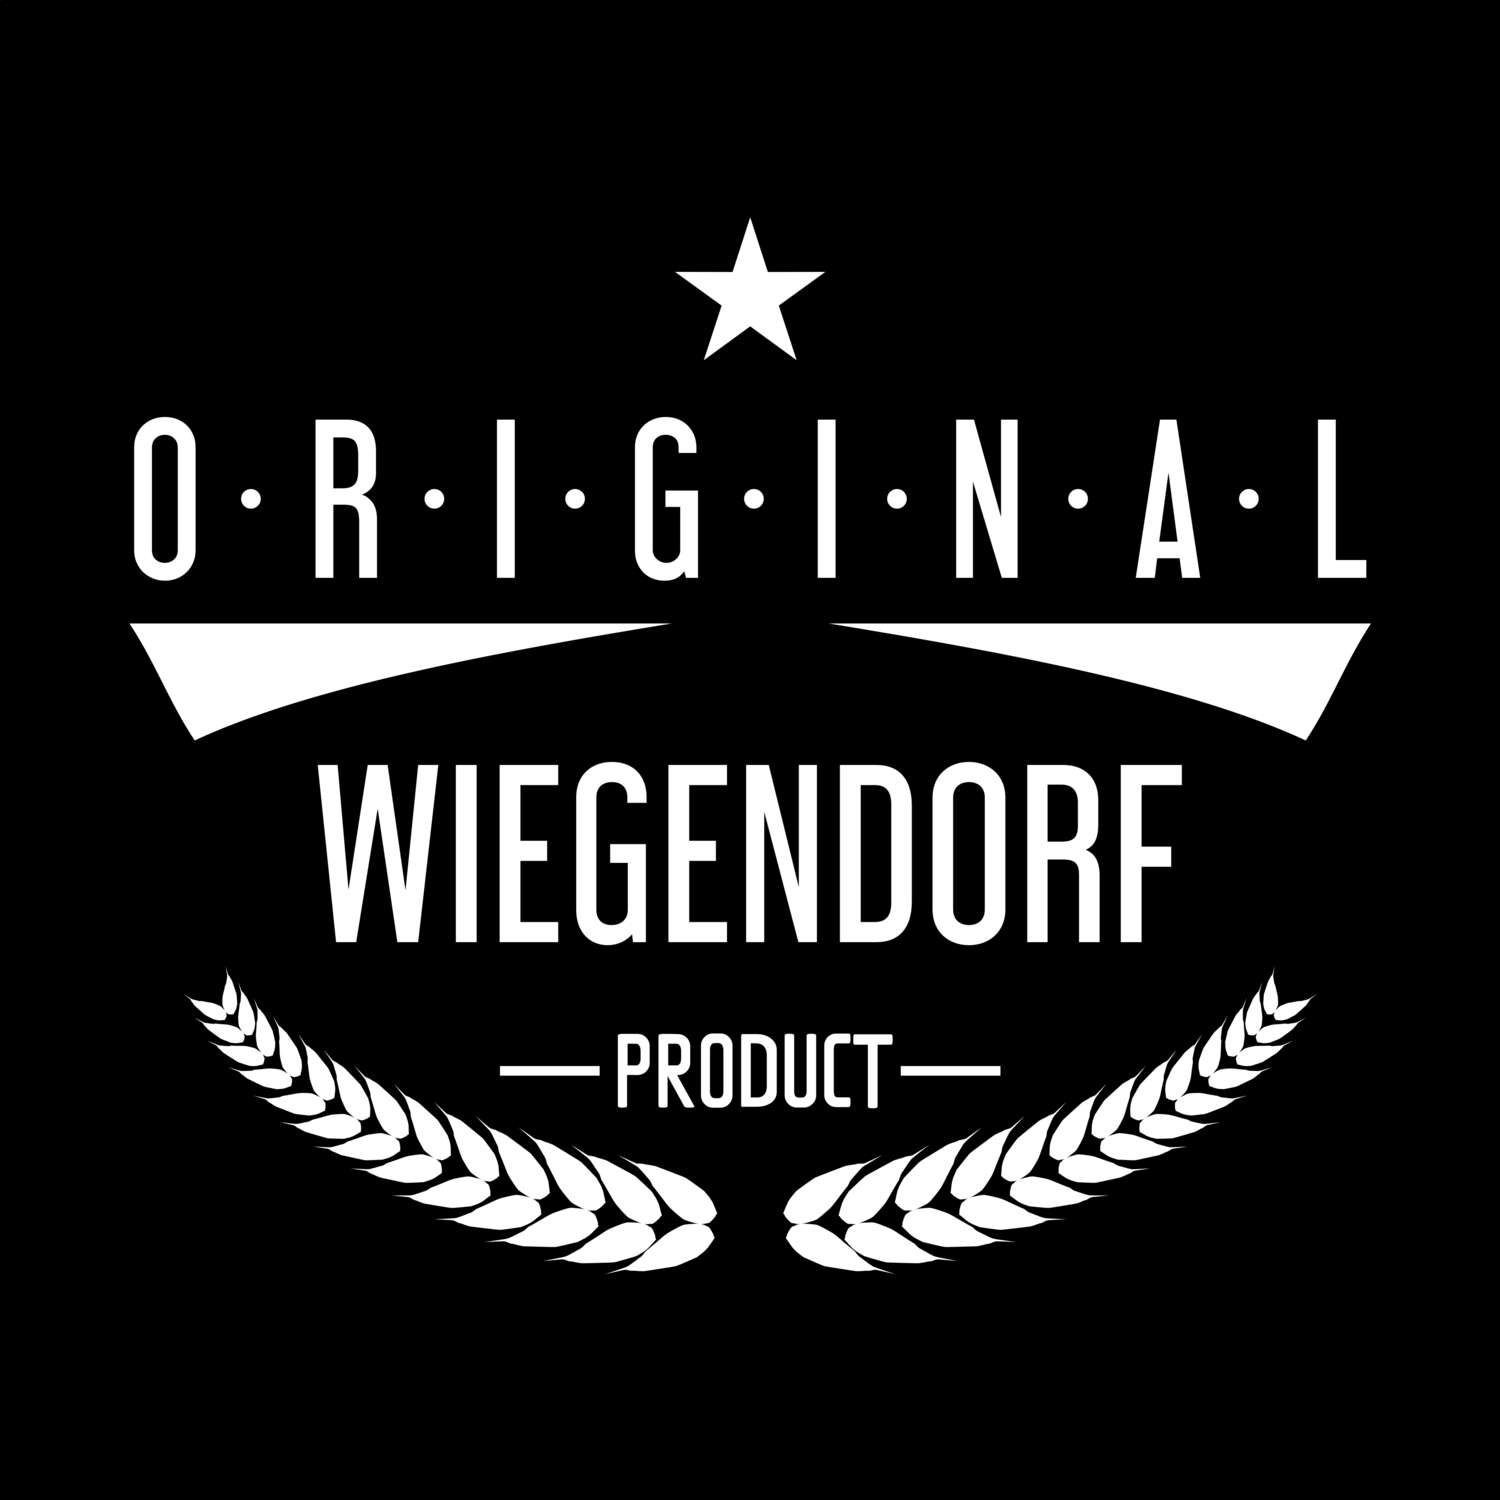 Wiegendorf T-Shirt »Original Product«